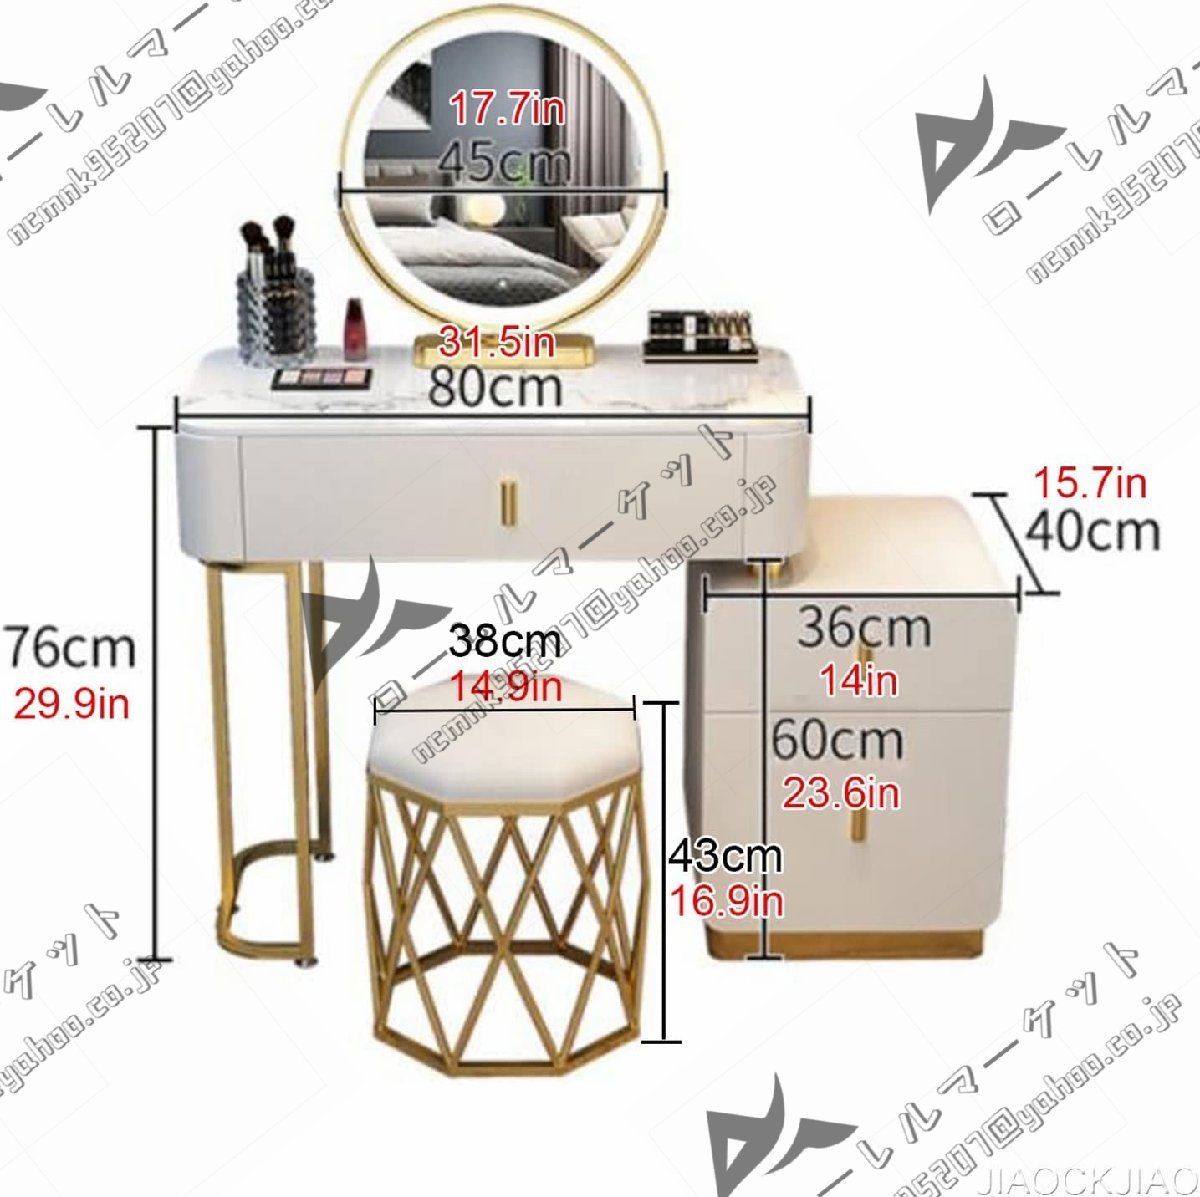  light attaching mirror attaching dresser dresser stool attaching white / gray dressing table set drawer attaching dresser 80cm